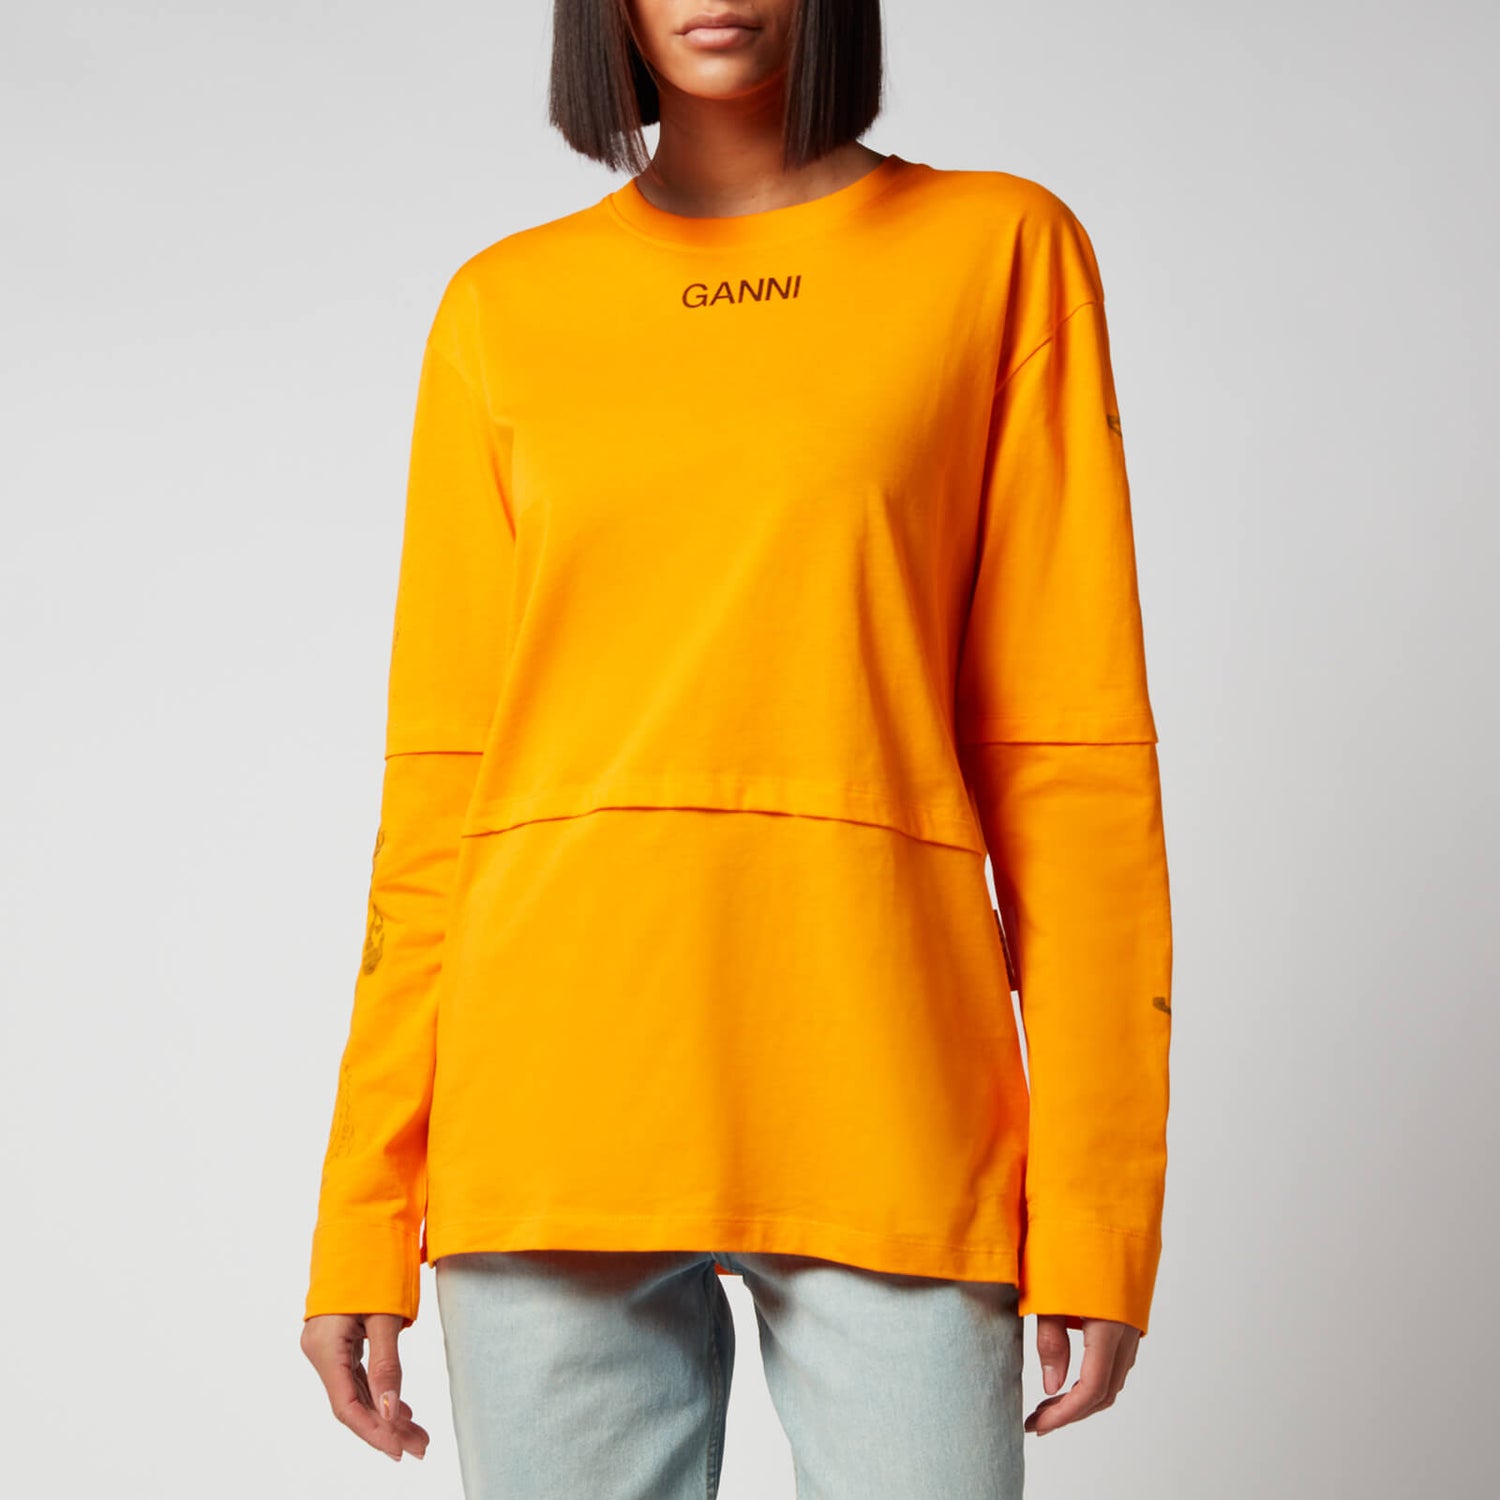 Ganni Women's Light Cotton Jersey Long Sleeved Top - Bright Marigold - XS